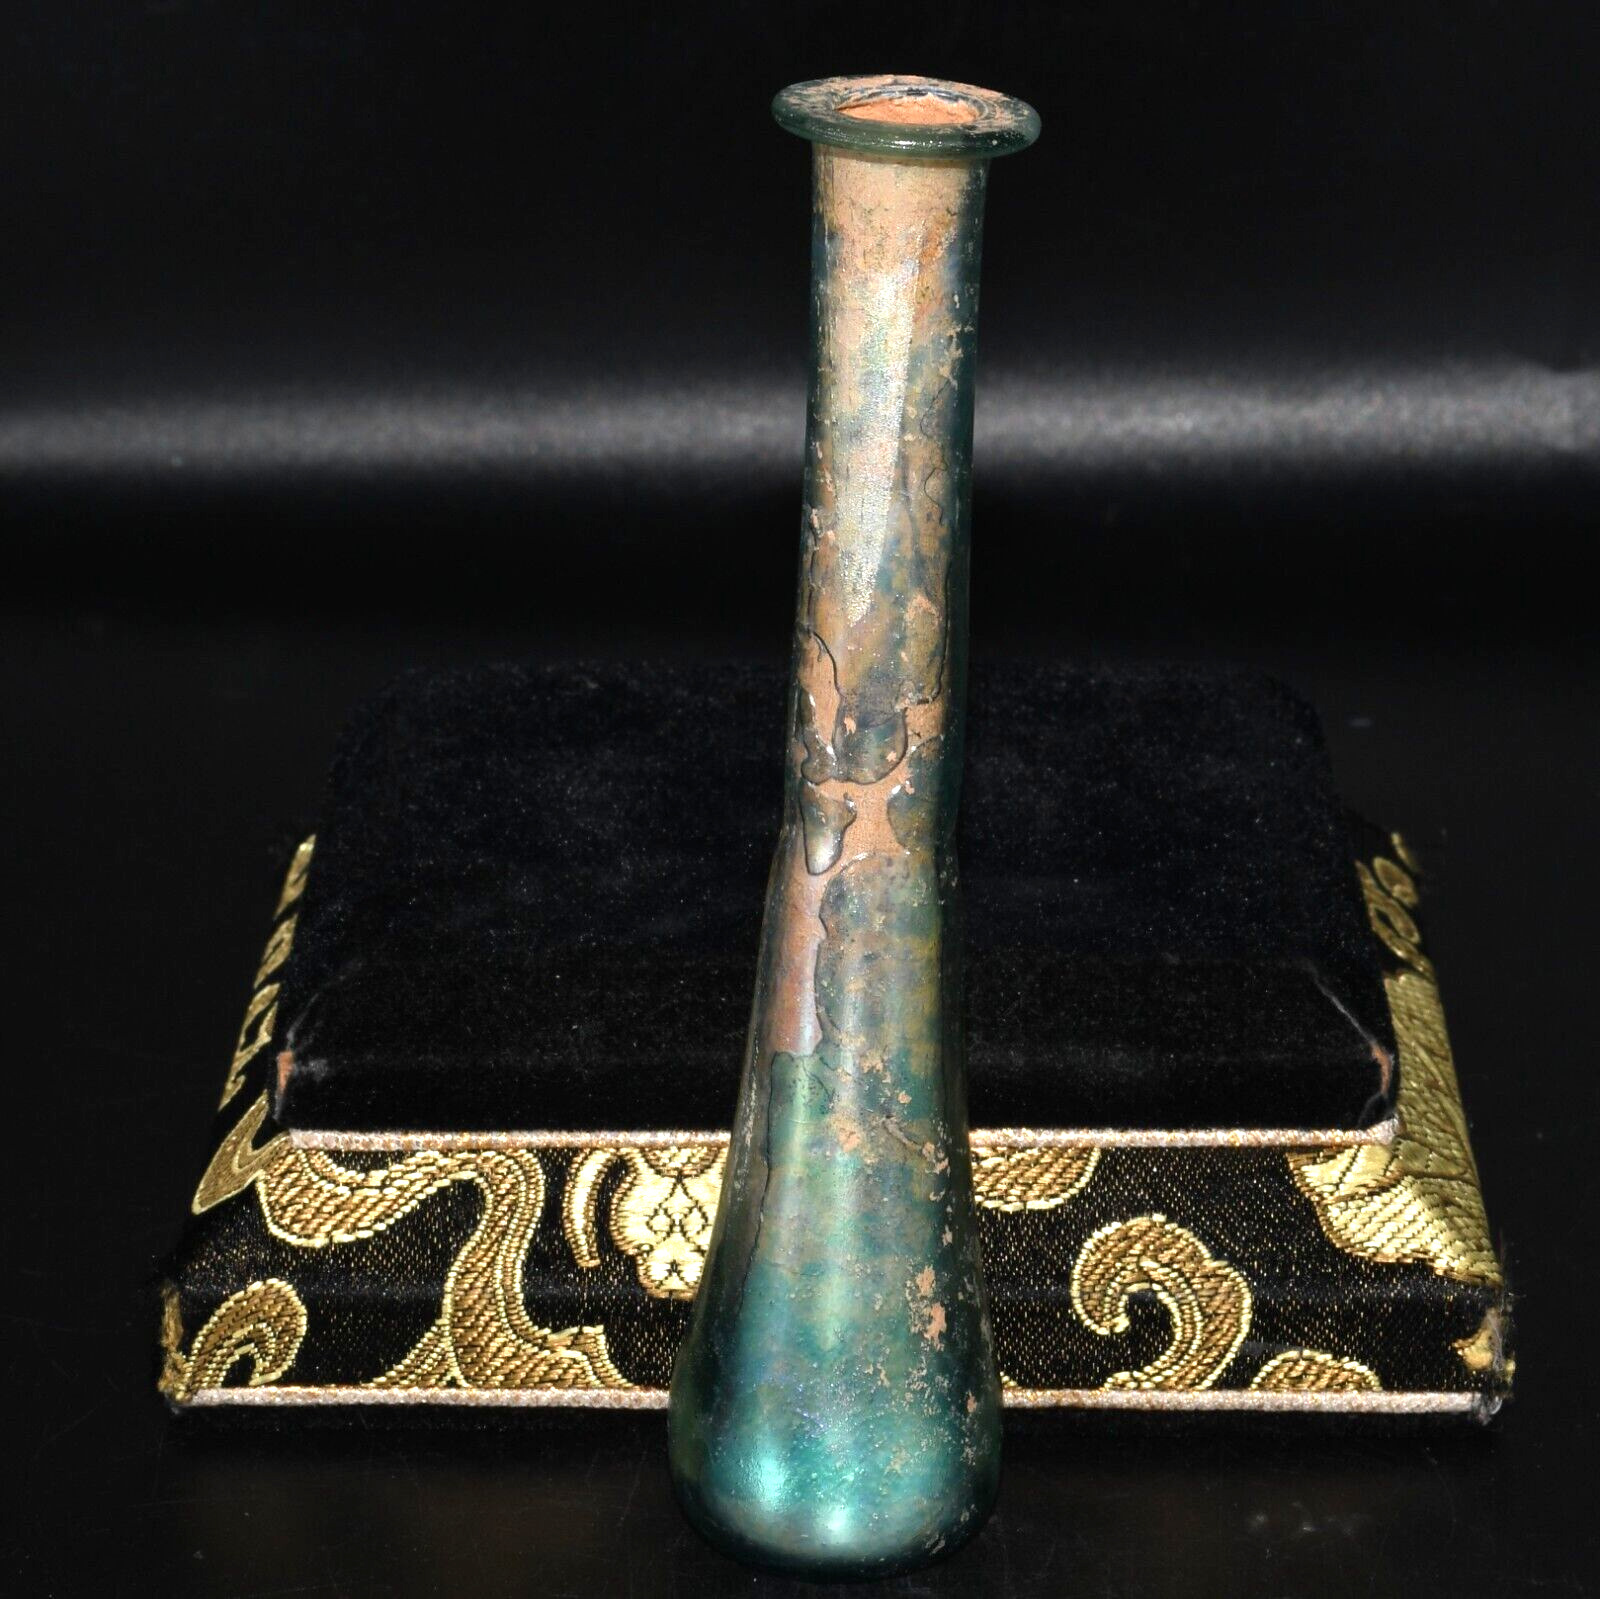 Genuine Ancient Iridescent Roman Glass Intact Medicine Bottle Ca. 1st Century AD